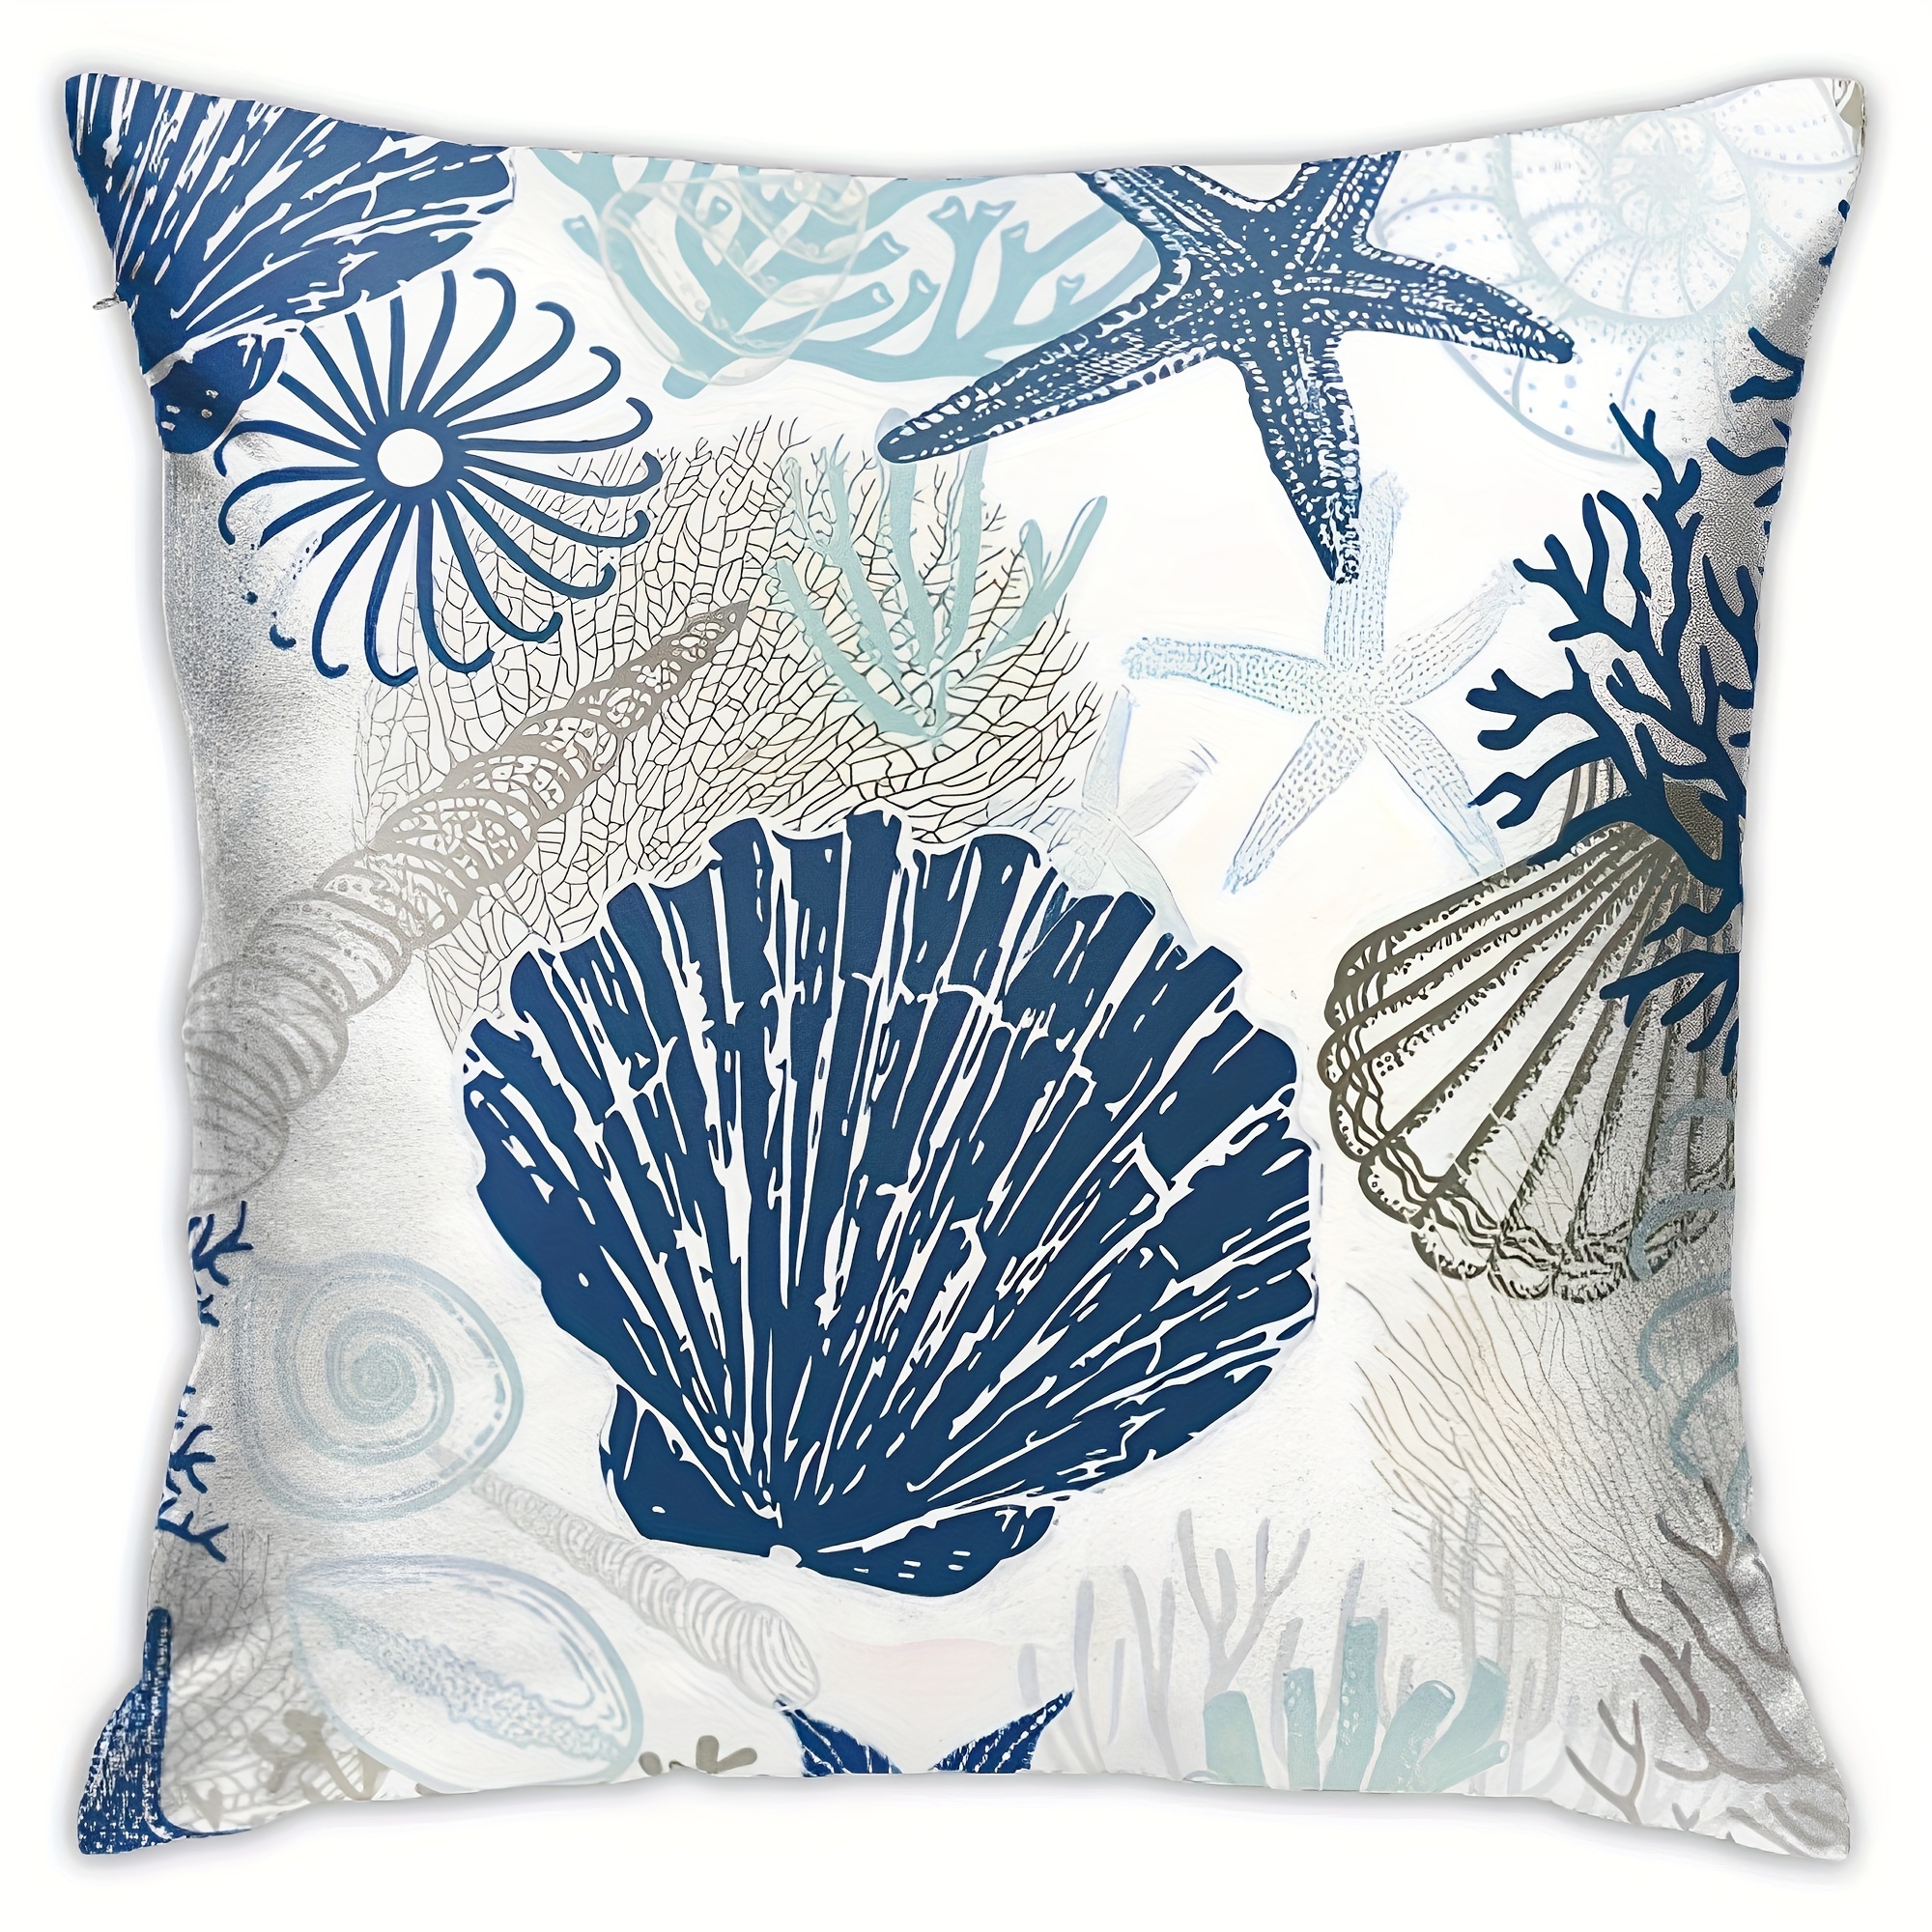 

1pc Throw Pillow Cover, Coastal Blue Ocean Themed Pillow Cover, Starfish Beach Decorative Pillowcase Square Cotton Cushion Cover For Bedroom Sofa Home Decor, 18x18 Inch